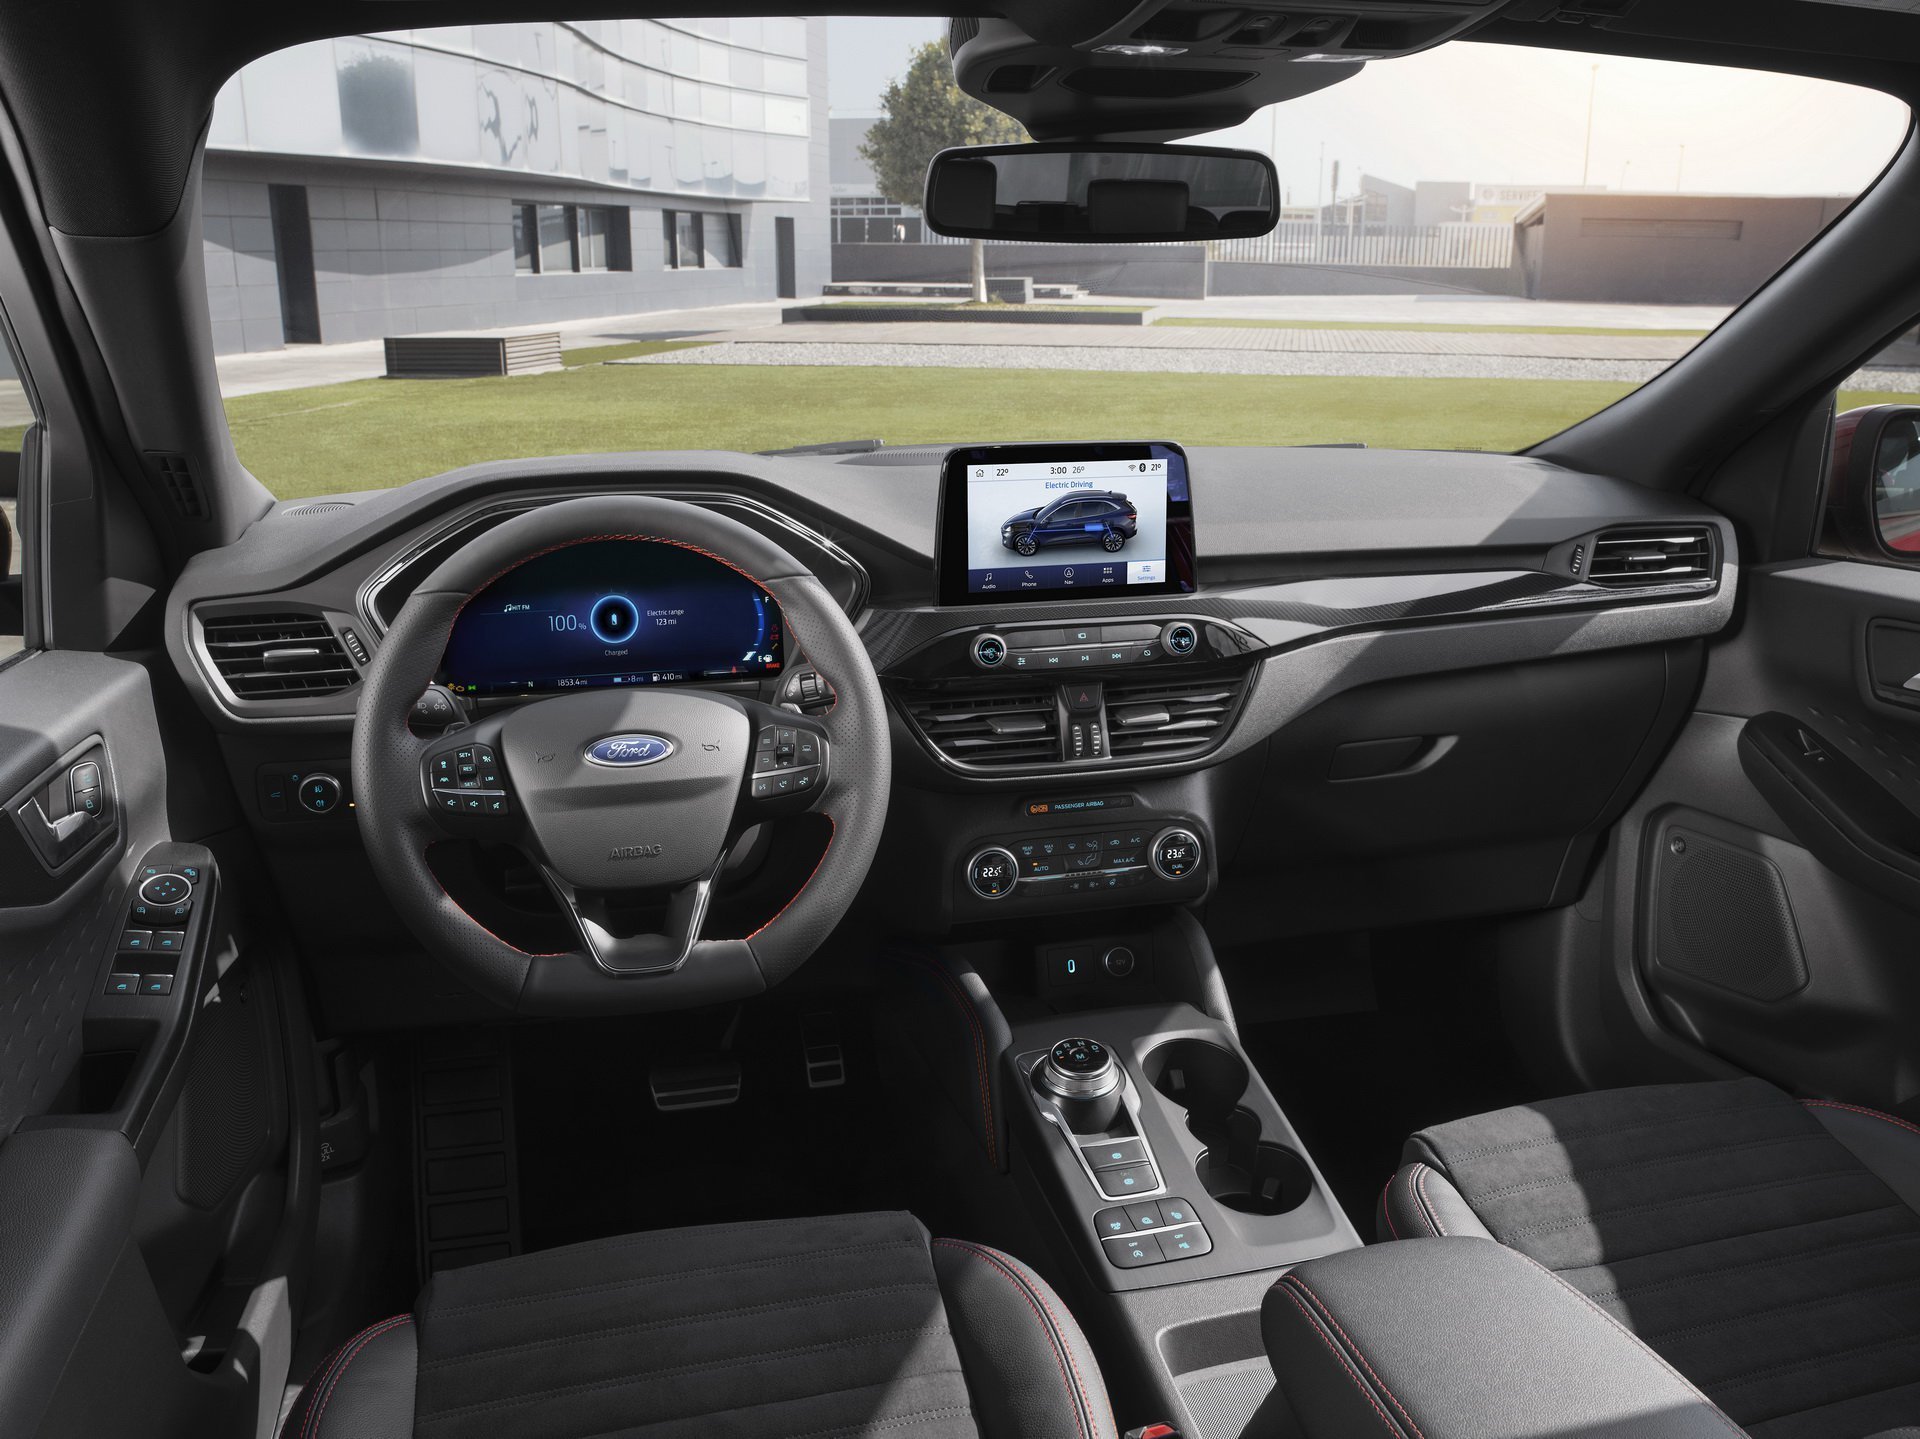 Immagine interni nuova Ford Kuga 2019